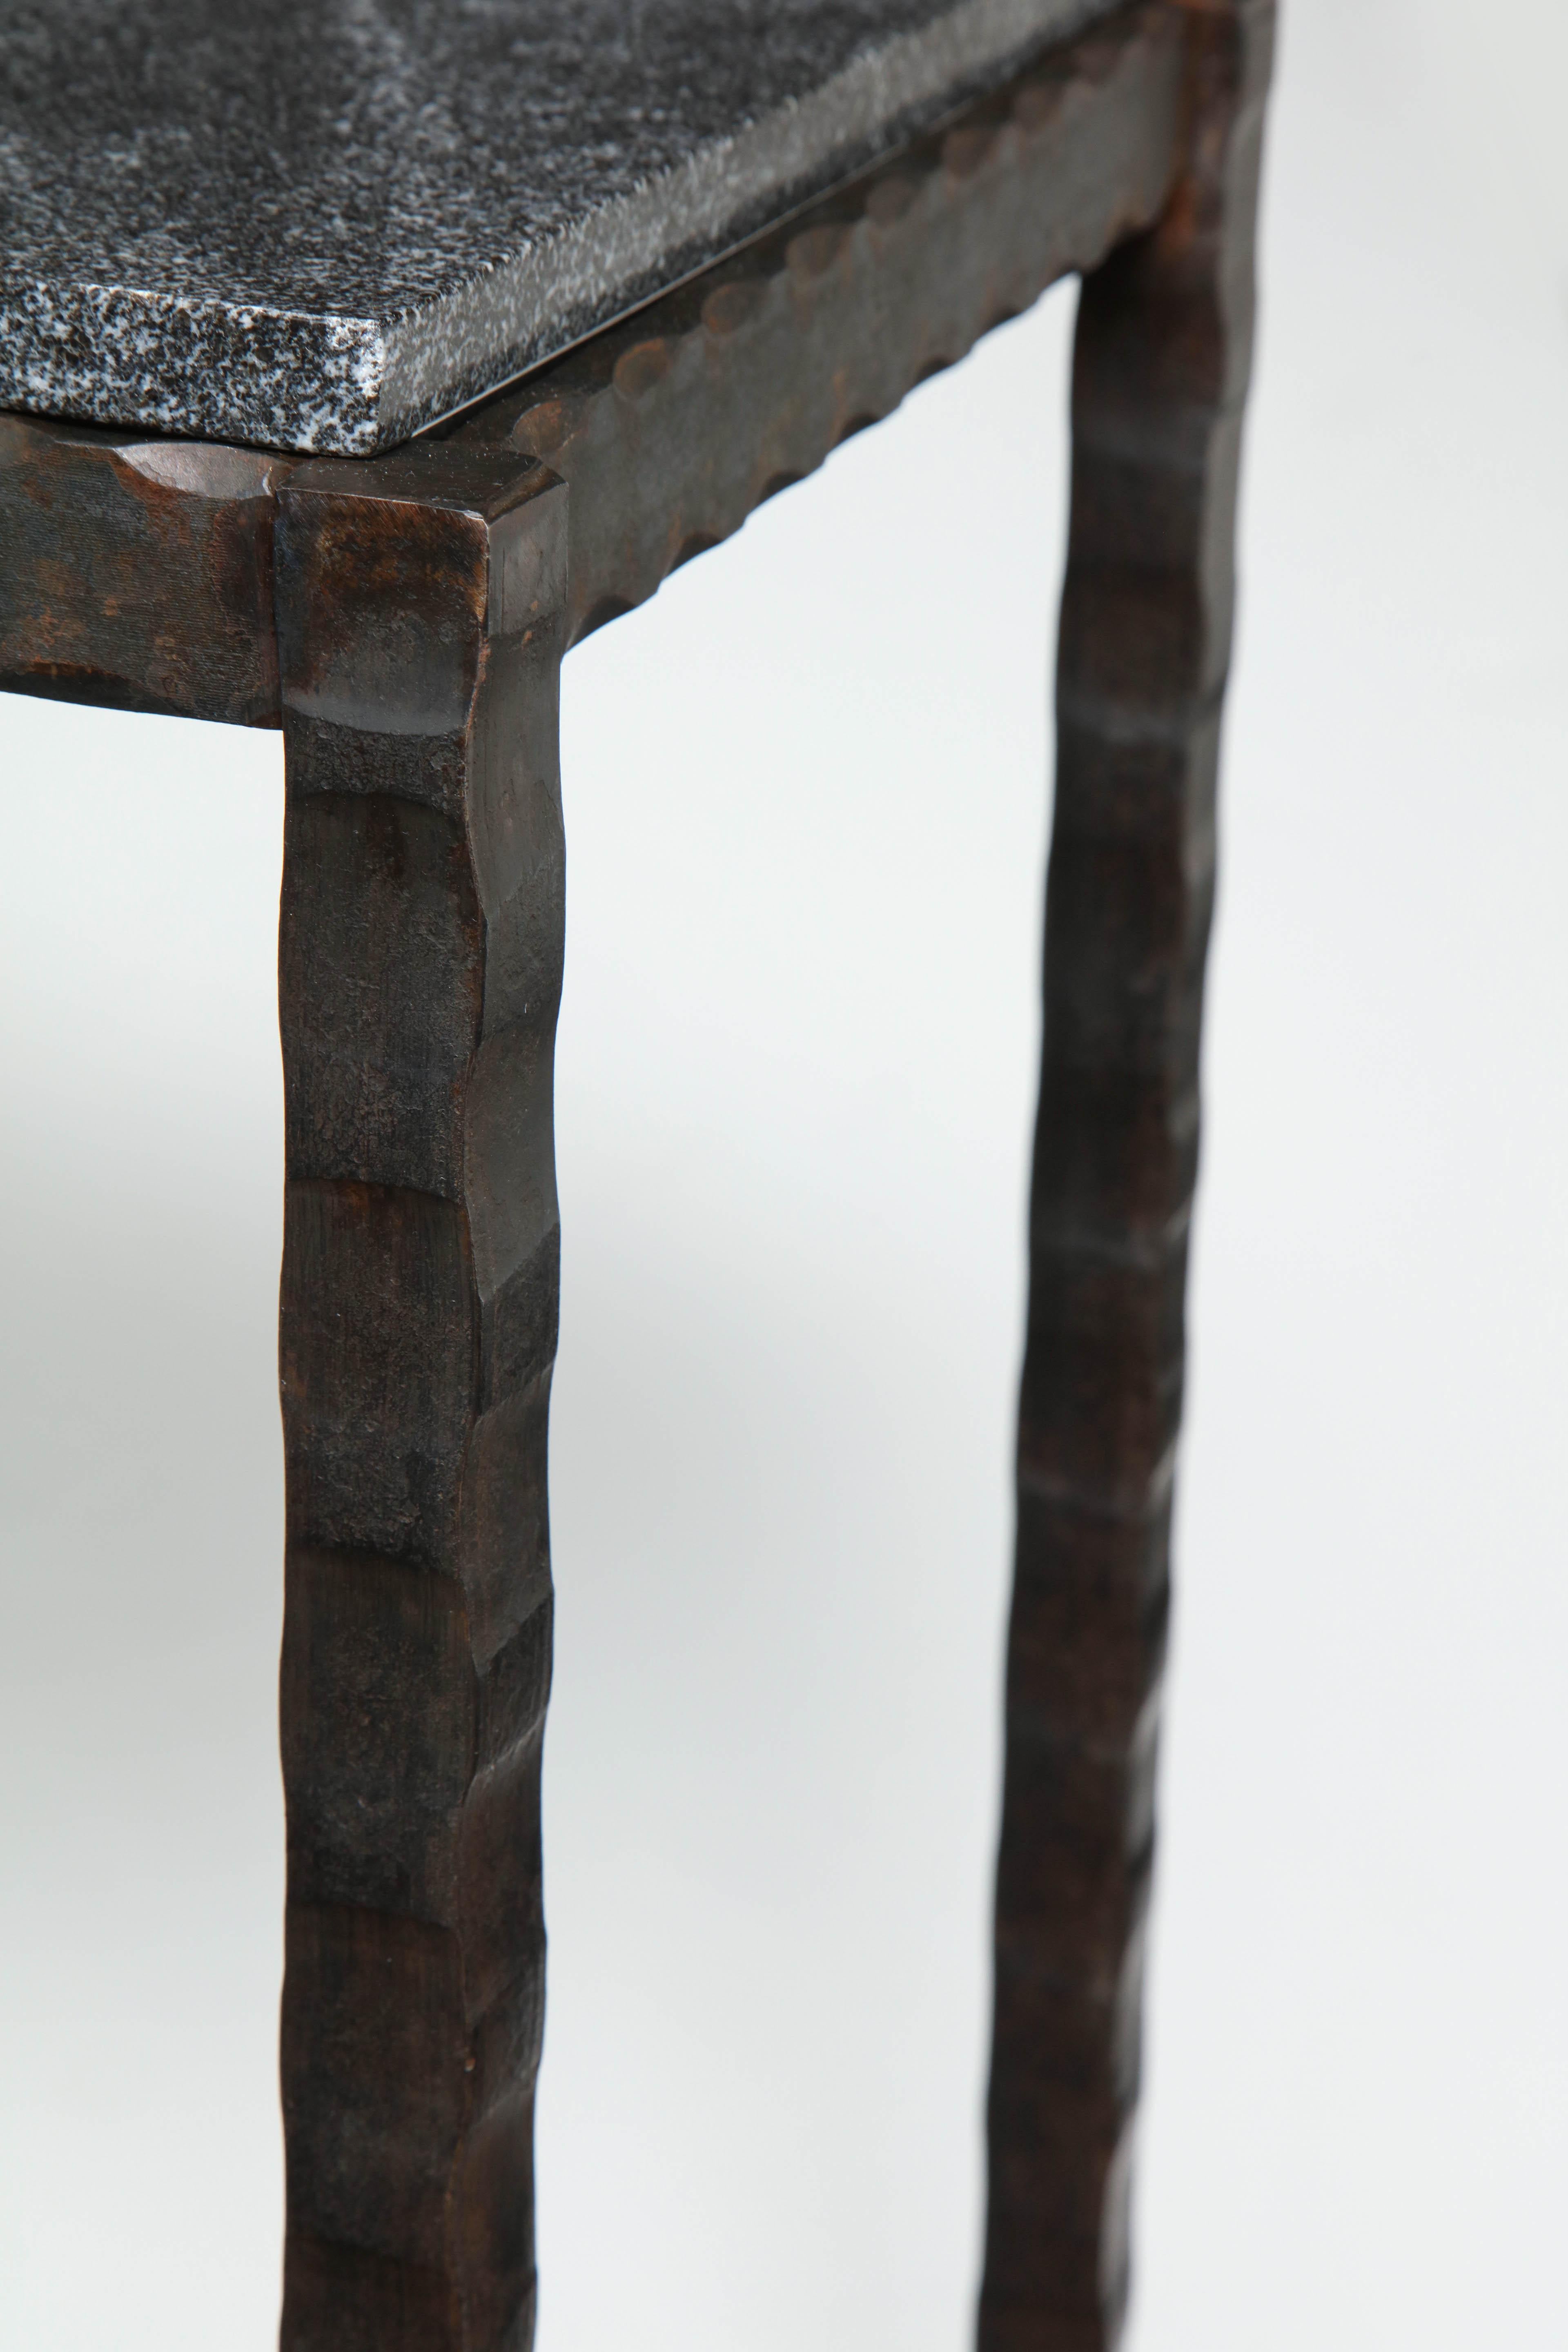 American Dazzling Granite Side Table in Hammered Steel Frame